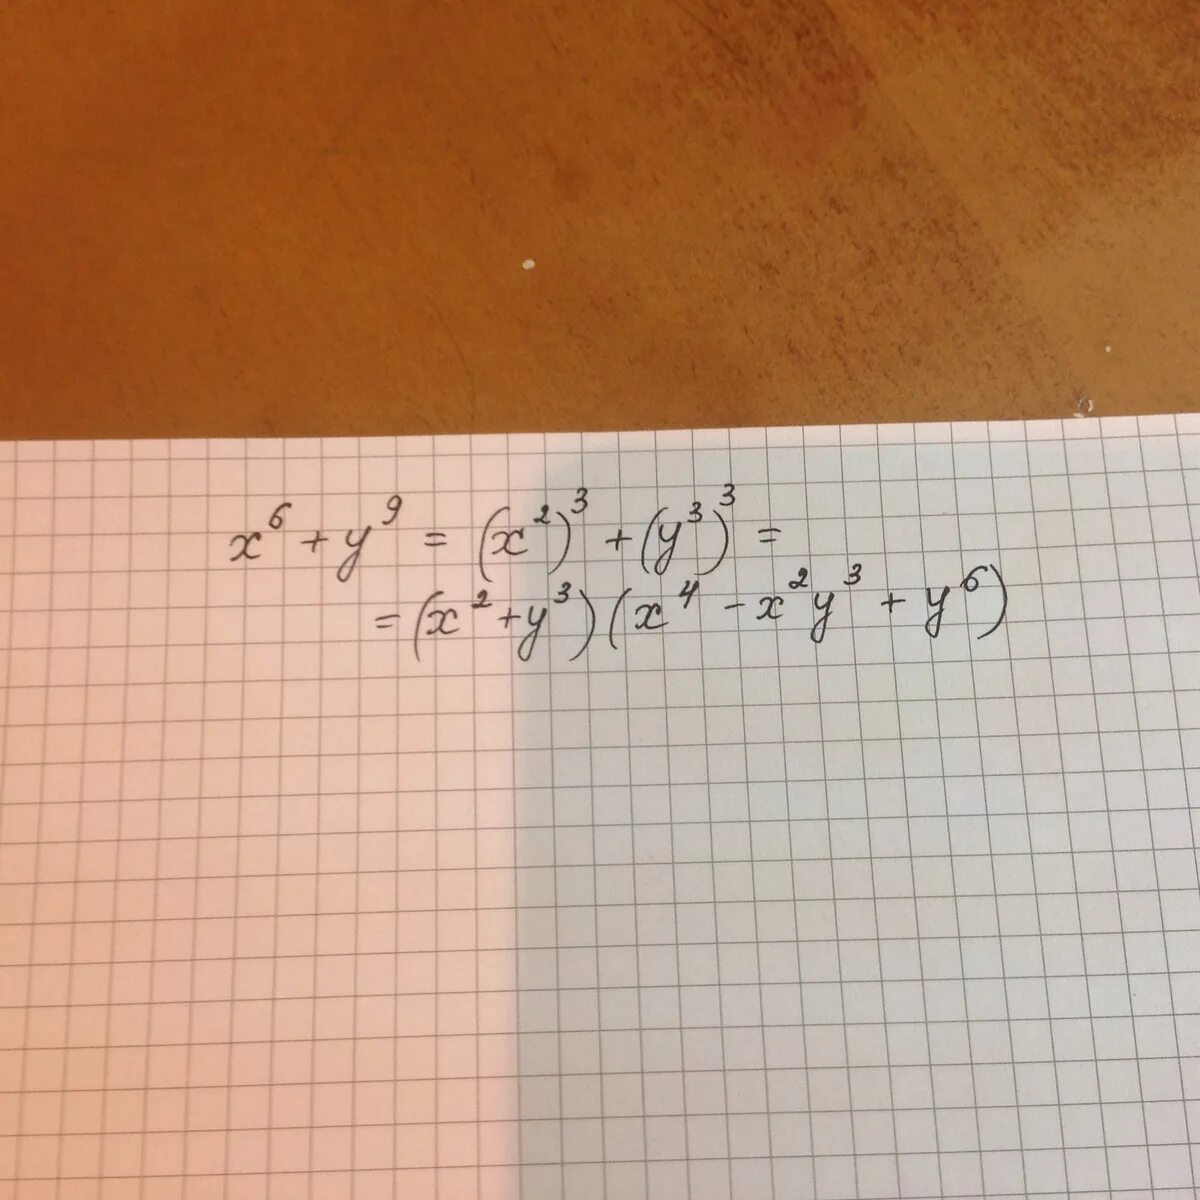 6x 8 ответ. 2 3 4 5. 4a a + 2 2 выражение а2 - 4 2а. Разложите на множители x(x-y)+a(x-y). X 5 1 разложить на множители.